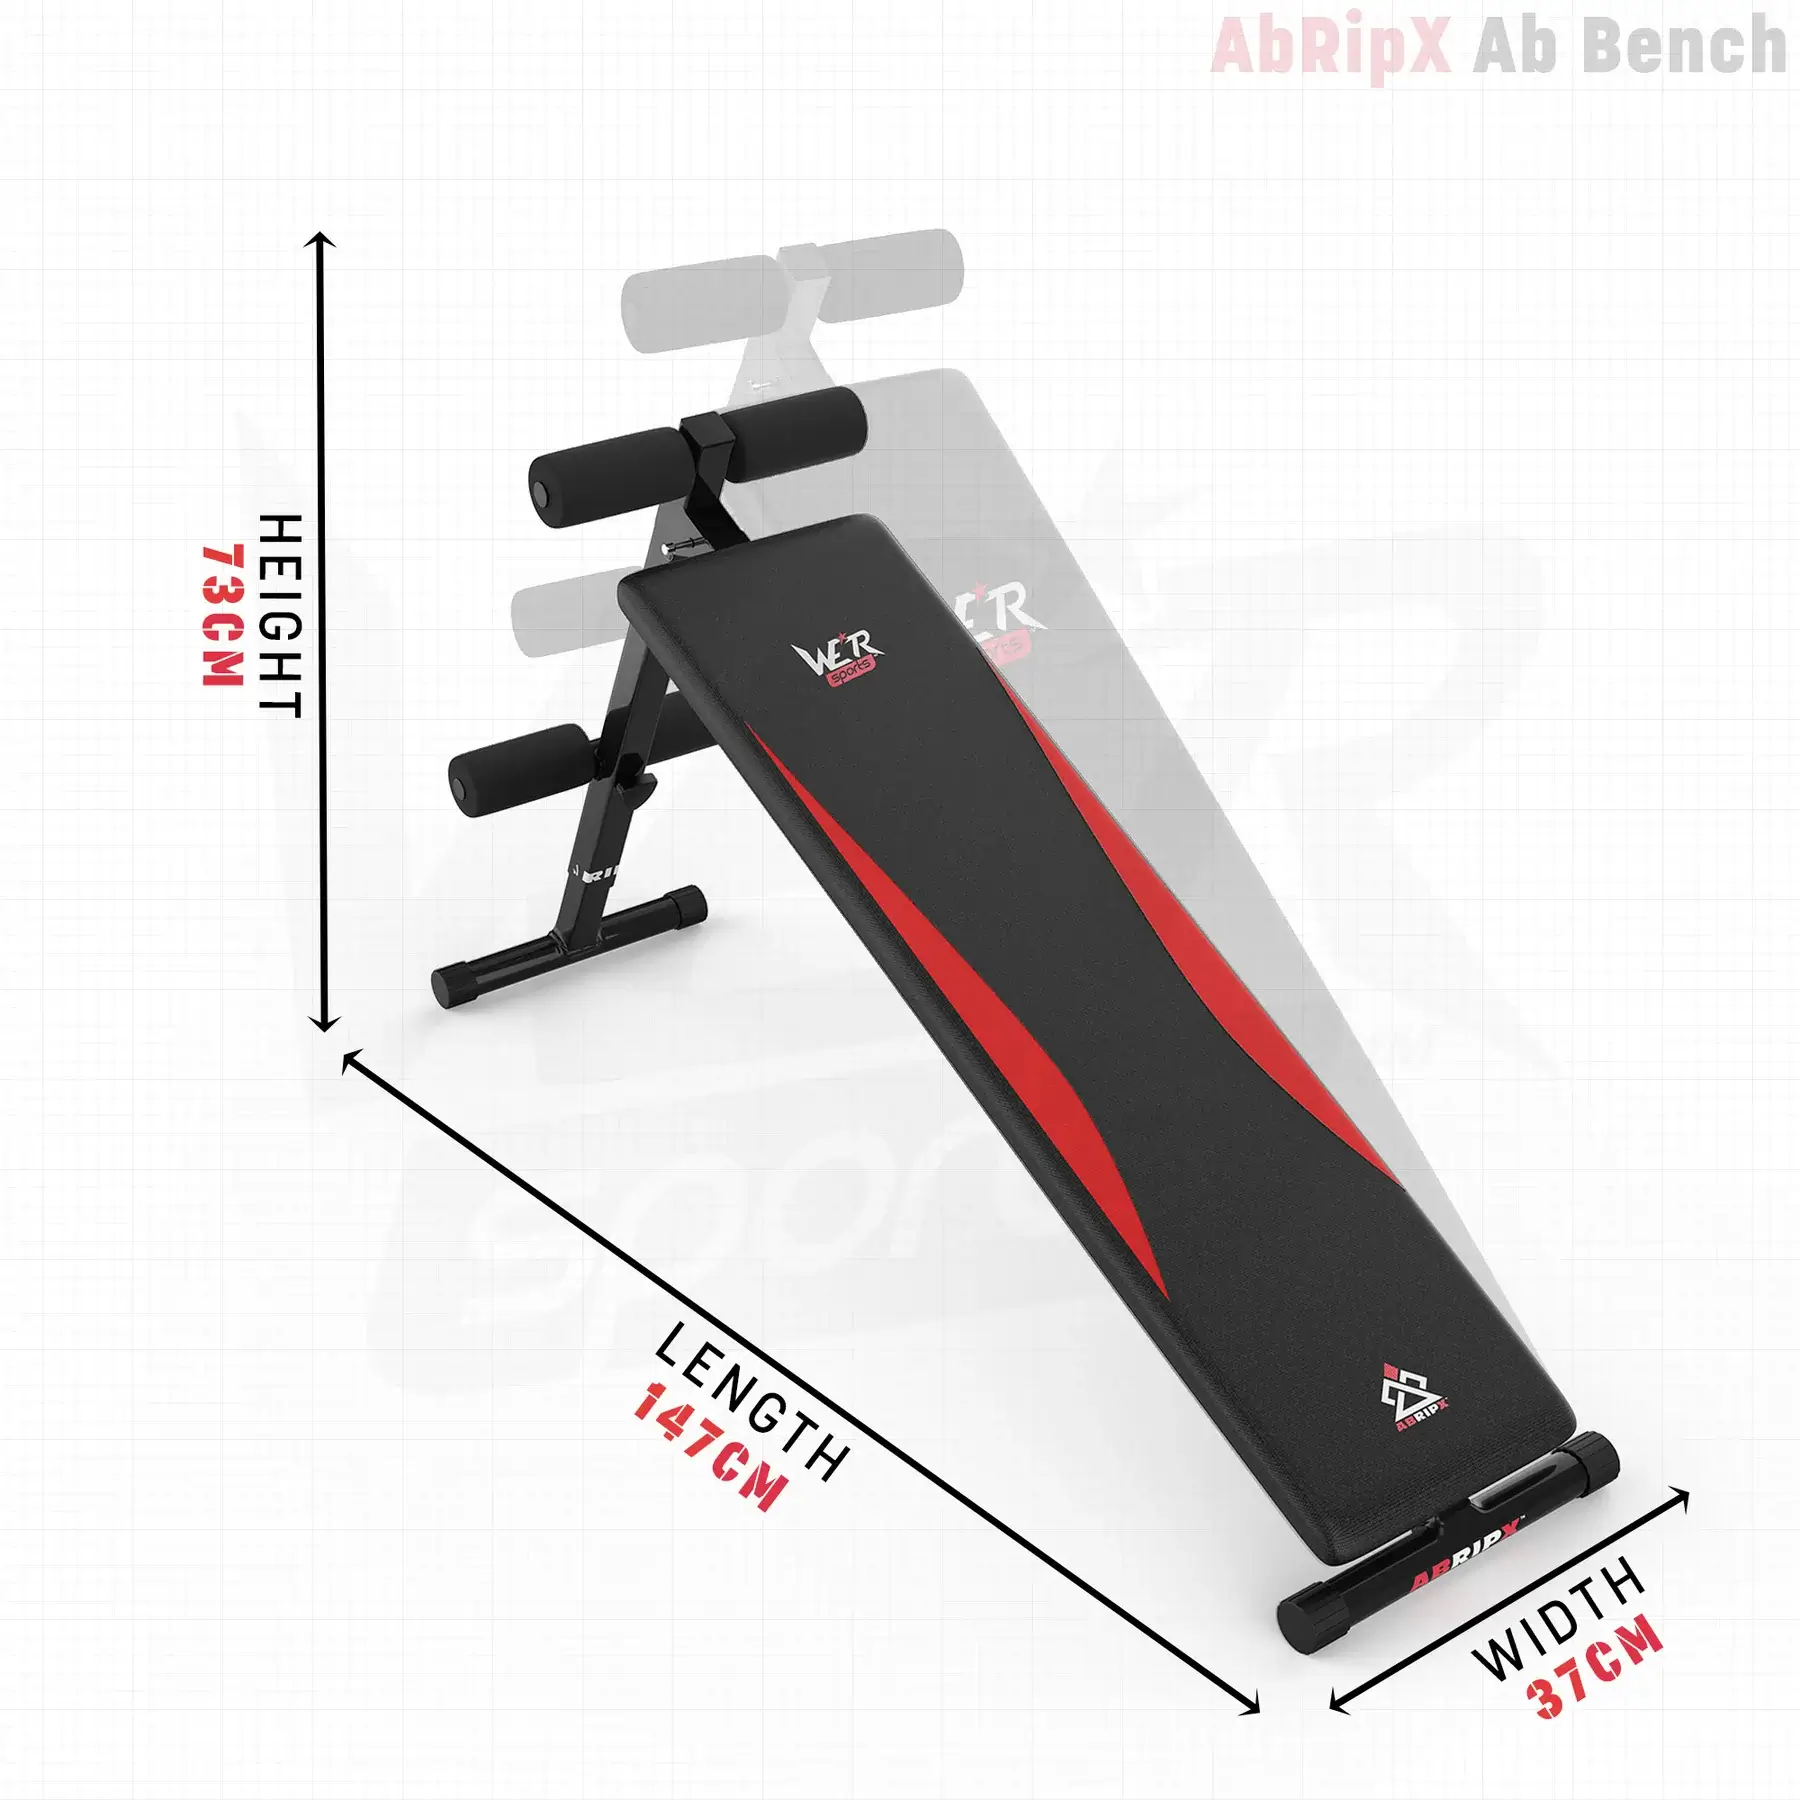 AbRipX Ab Bench – home gym equipment